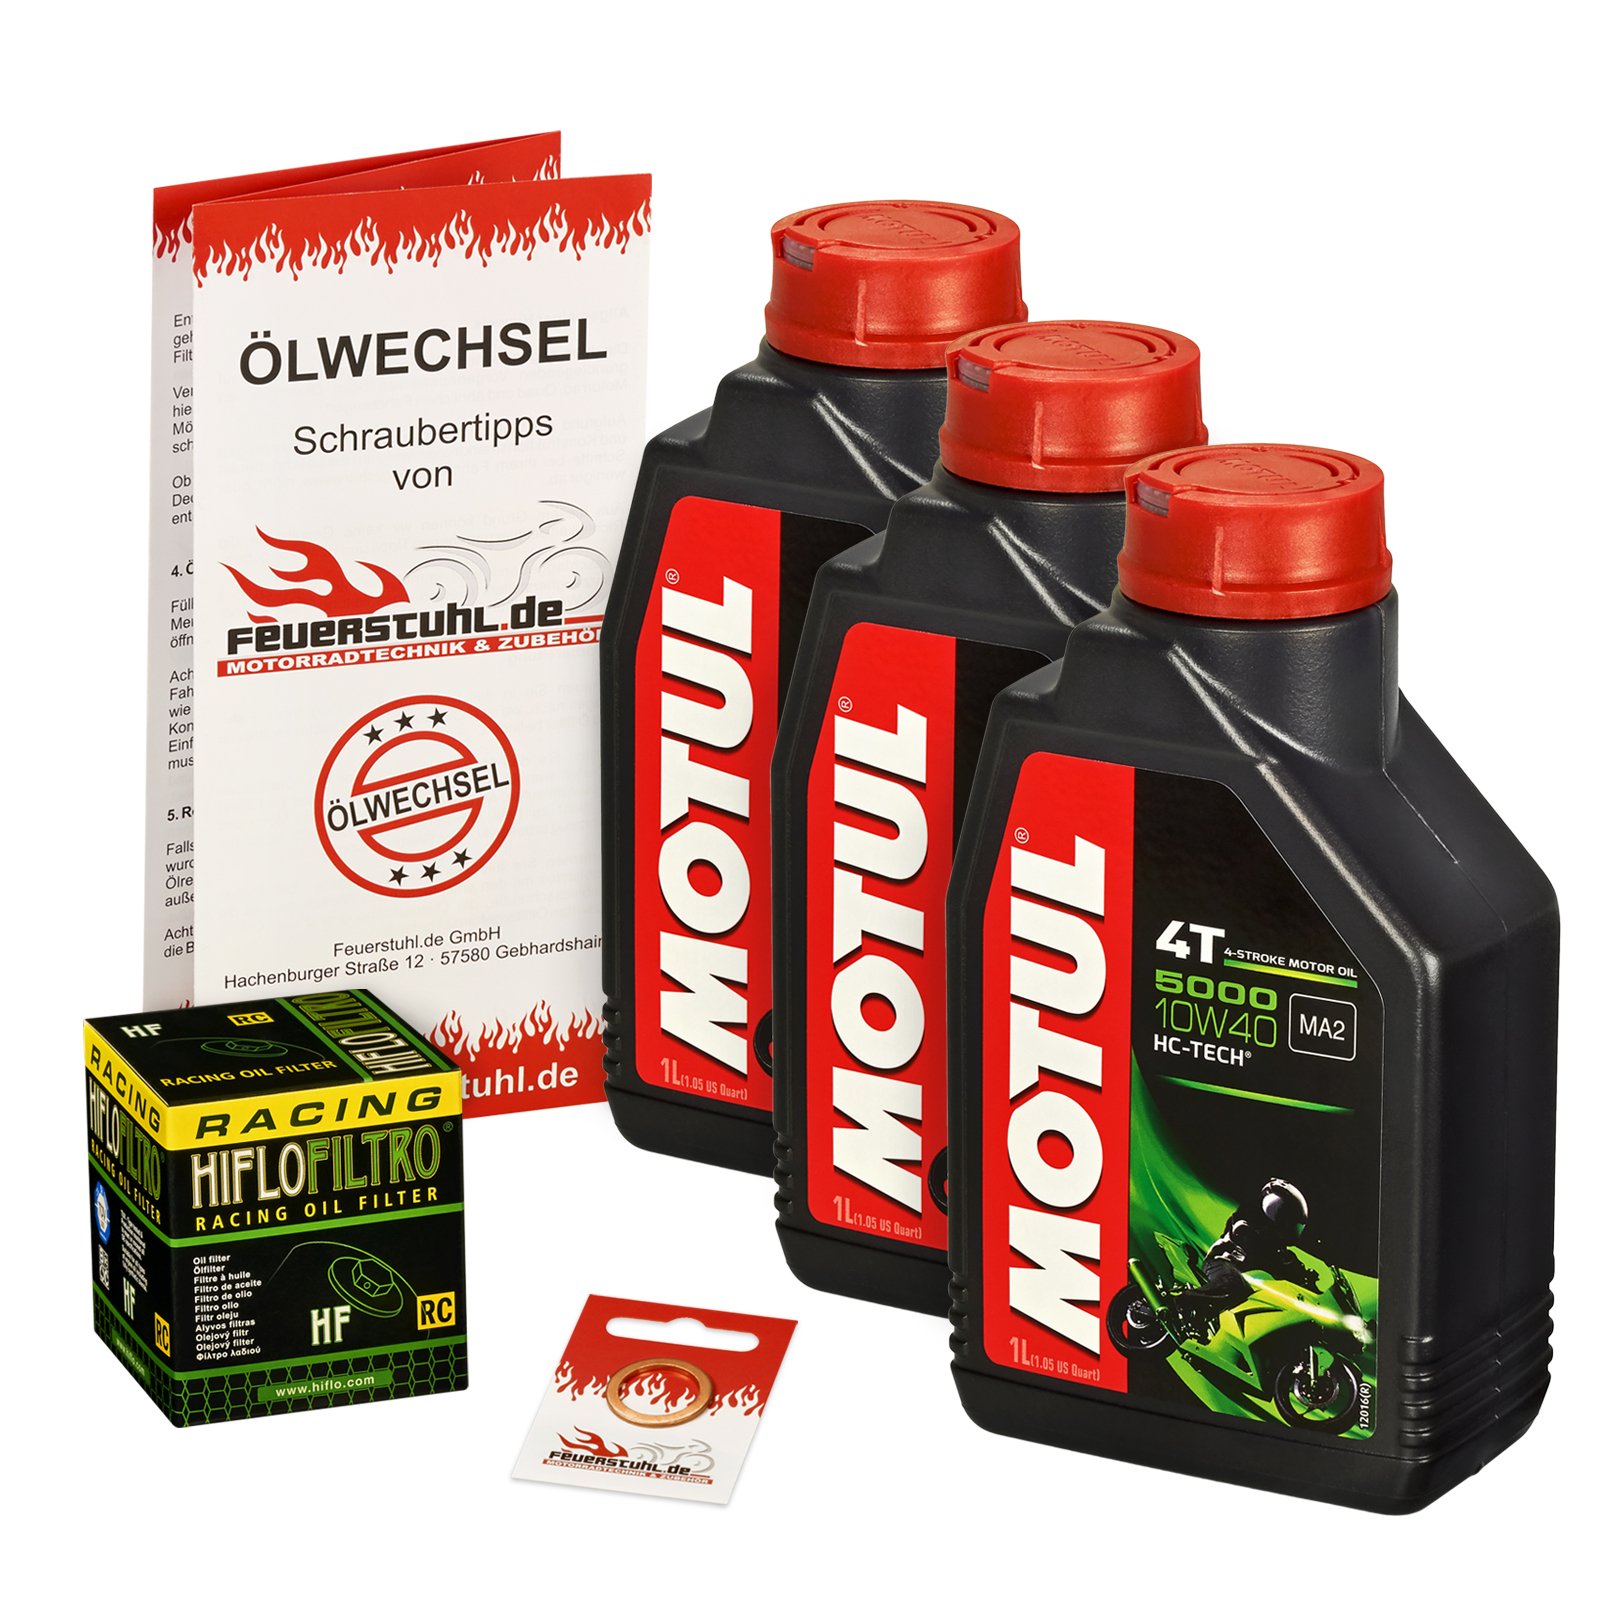 Motul 10W-40 Öl + HiFlo Ölfilter für Kawasaki EN 500, 90-93, EN500A - Ölwechselset inkl. Motoröl, Racing Filter, Dichtring von Feuerstuhl.de GmbH